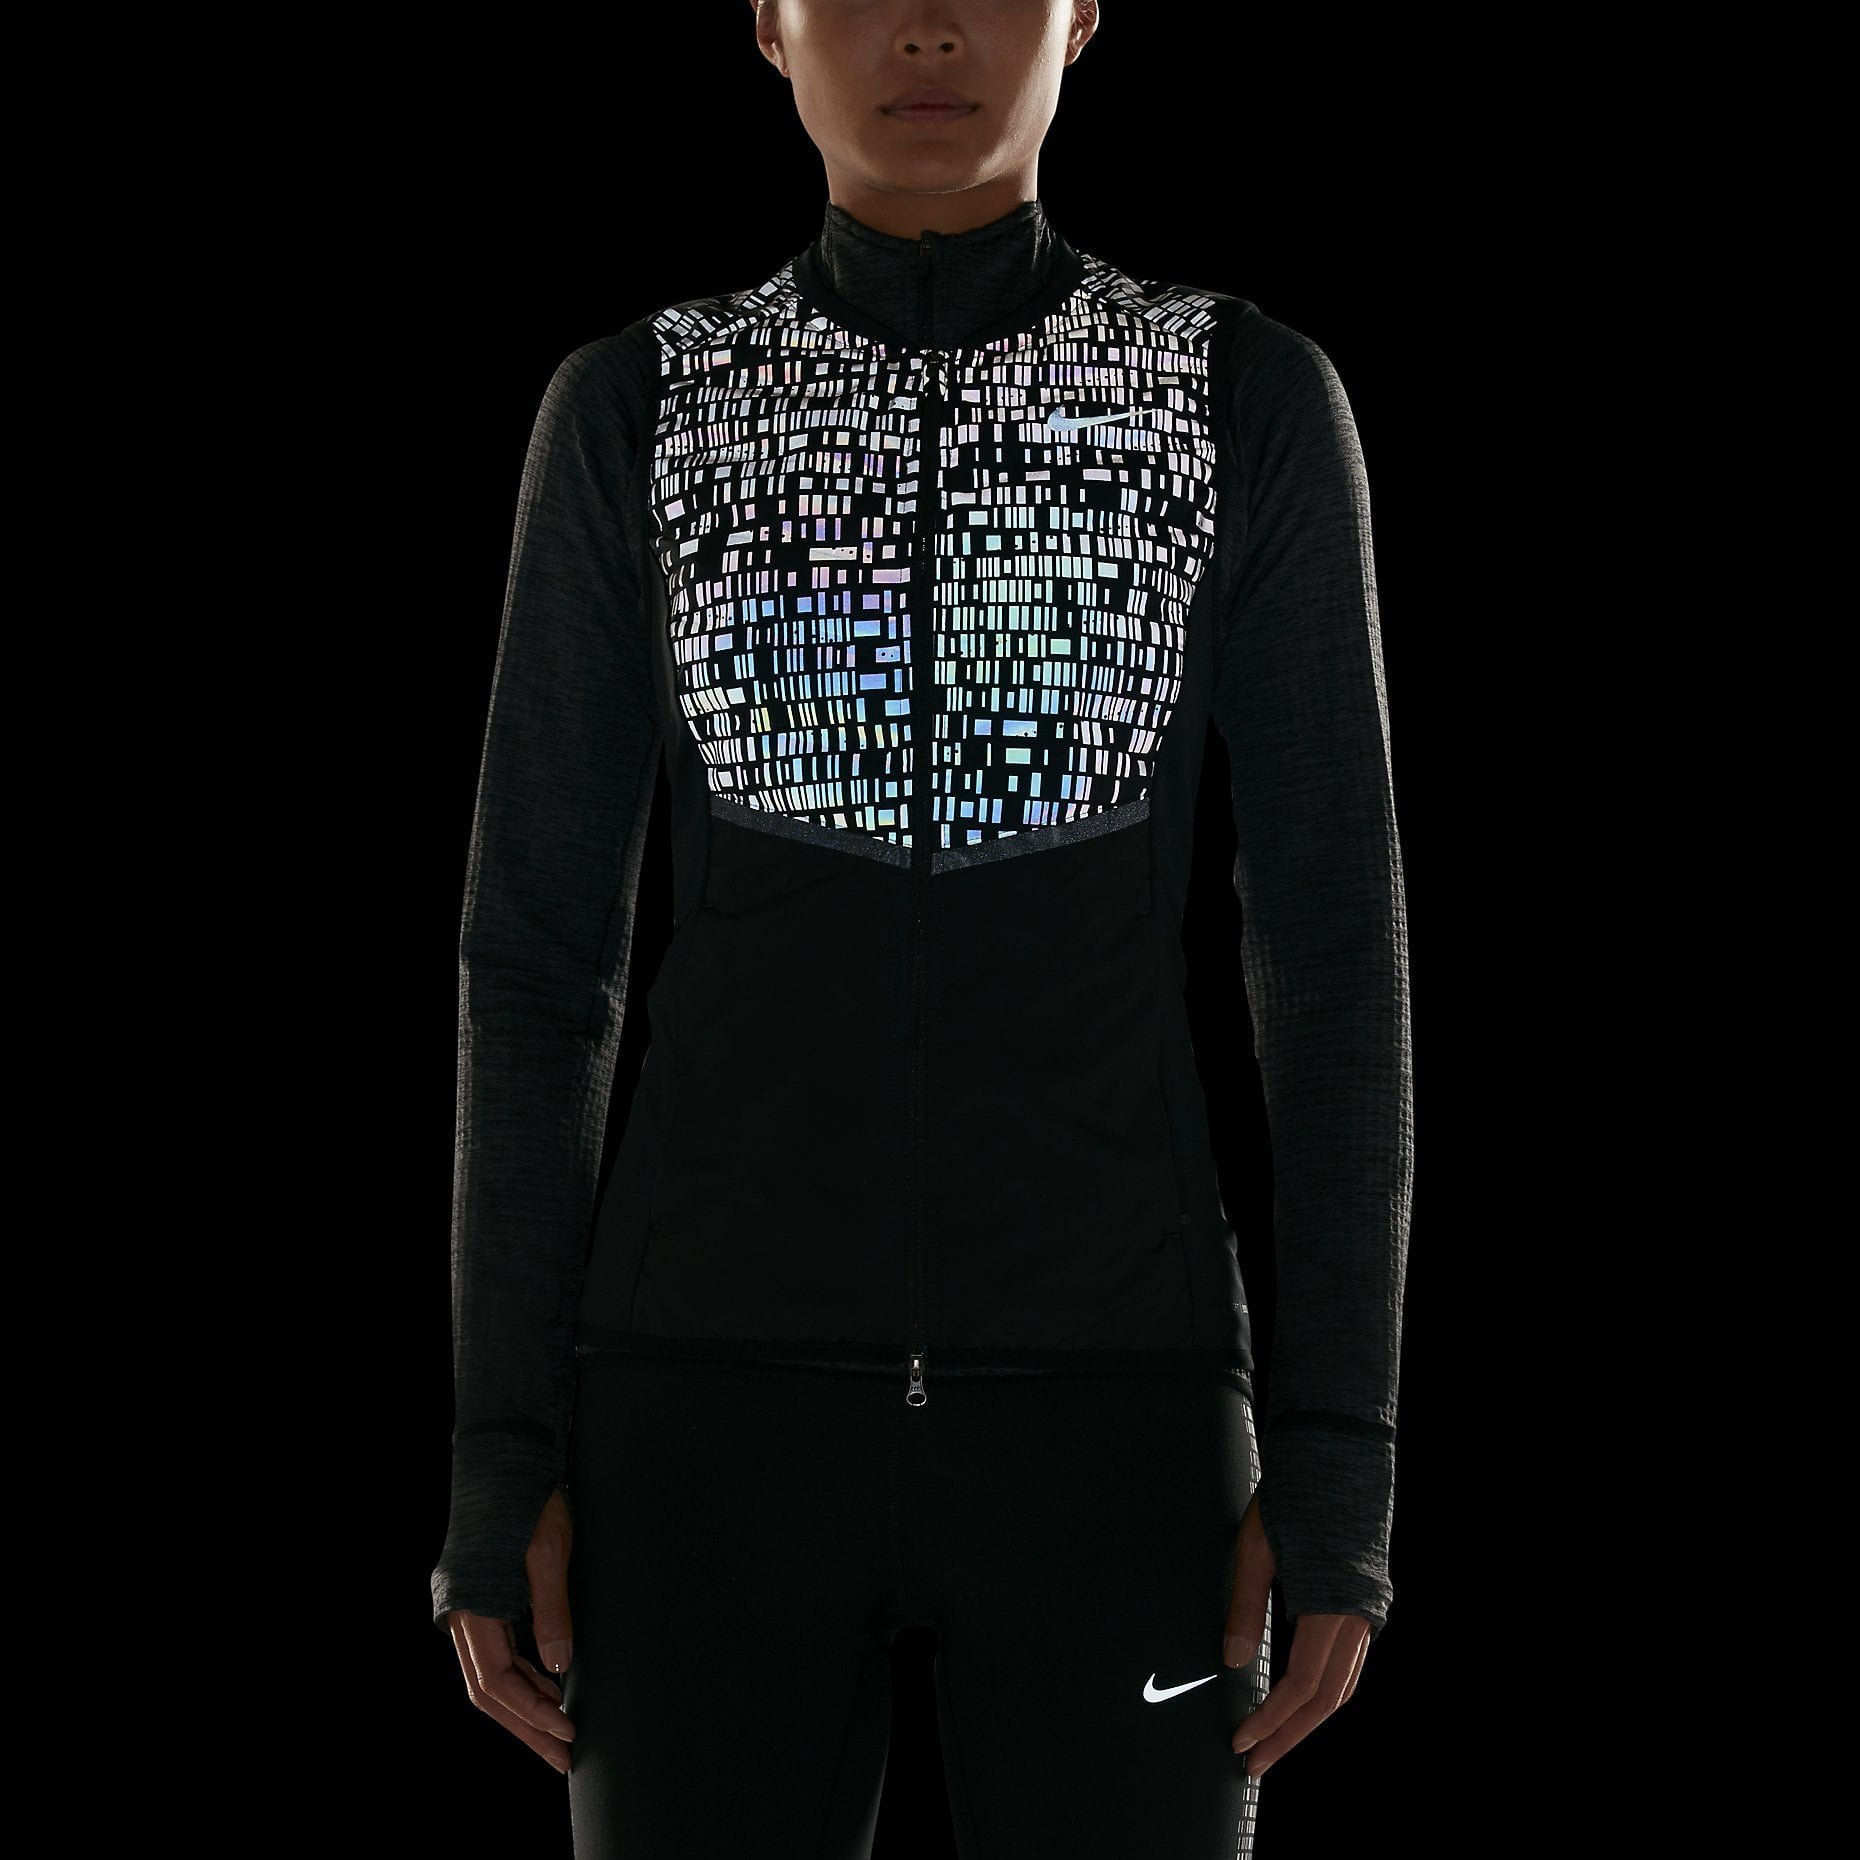 Nike Aeroloft Flash Vest | The Best, Most Stylish Reflective Running Gear For Nighttime Workouts | POPSUGAR Fitness Photo 3